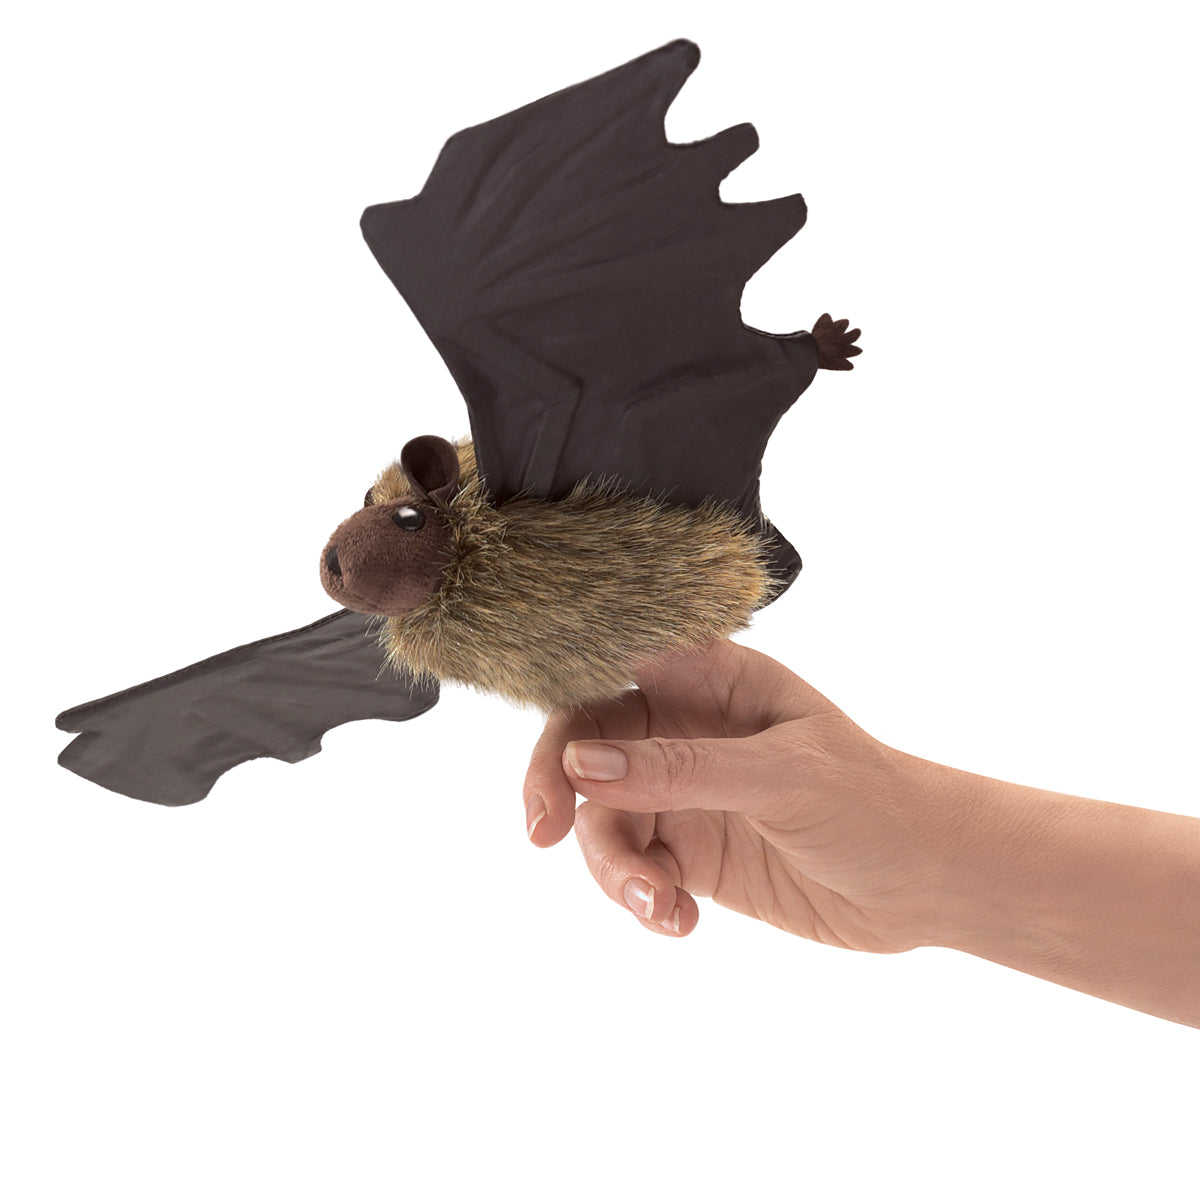 Folkmanis Puppet  - Little Brown Bat    